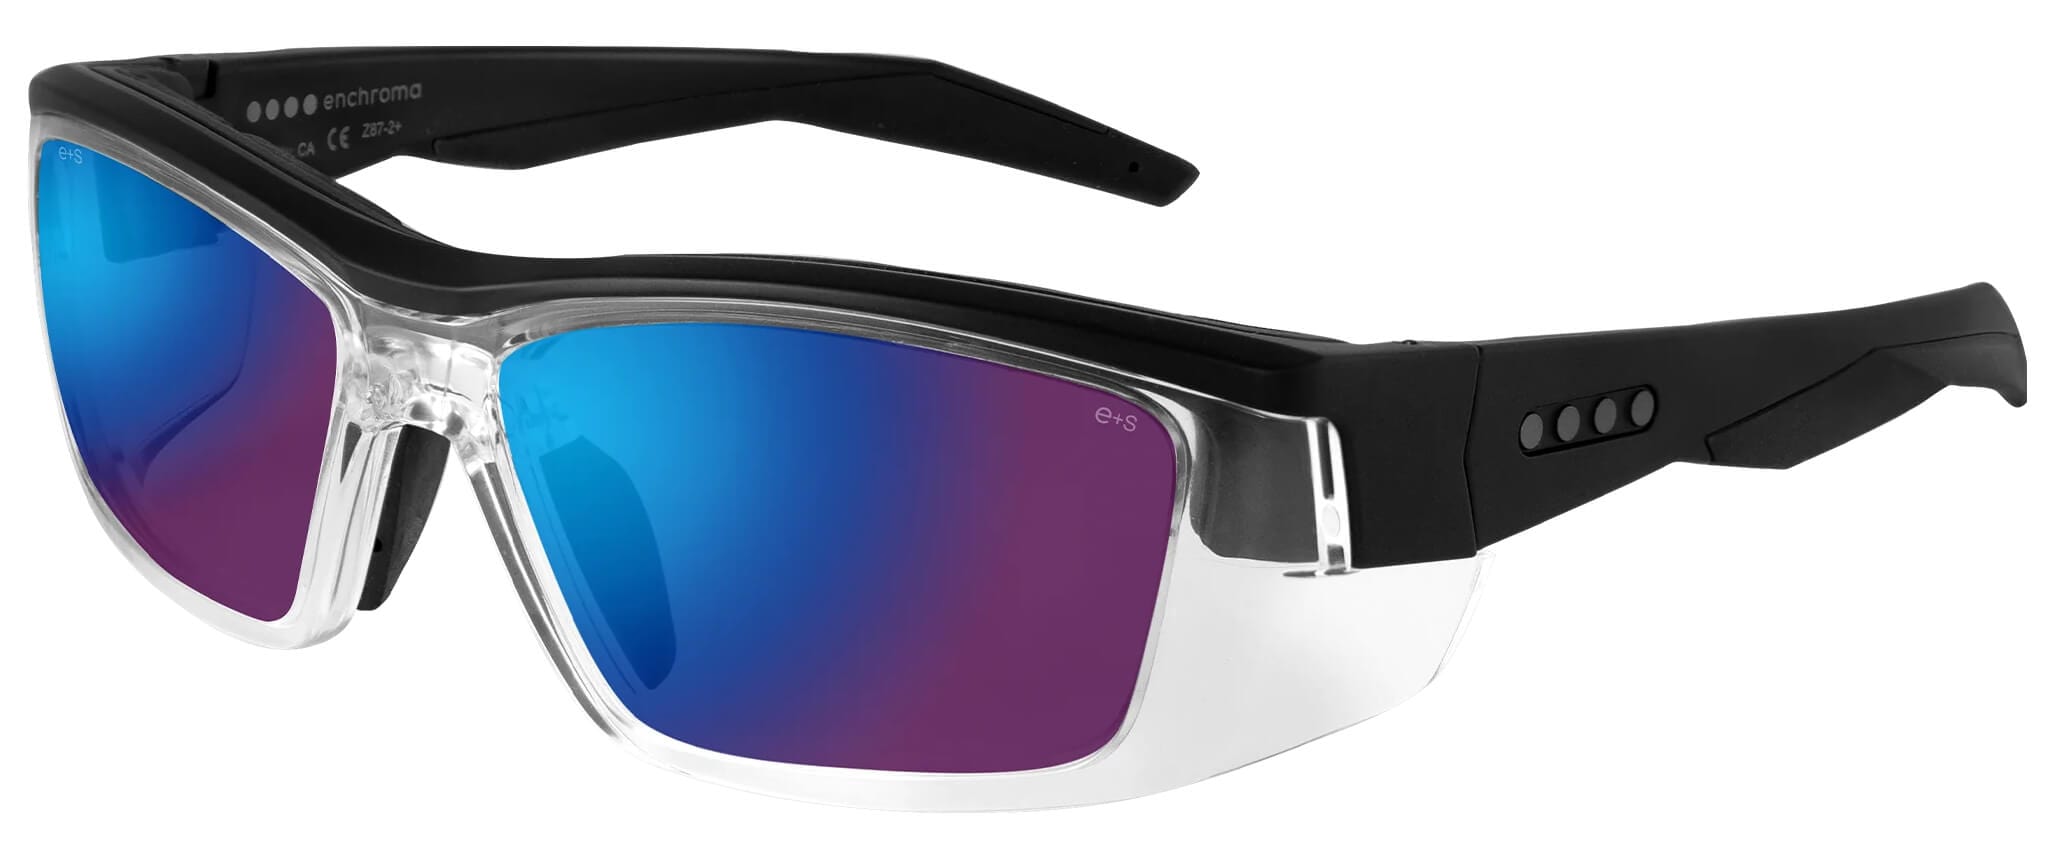 EnChroma Martinez Color Blind Safety Glasses with Outdoor Protan Lens